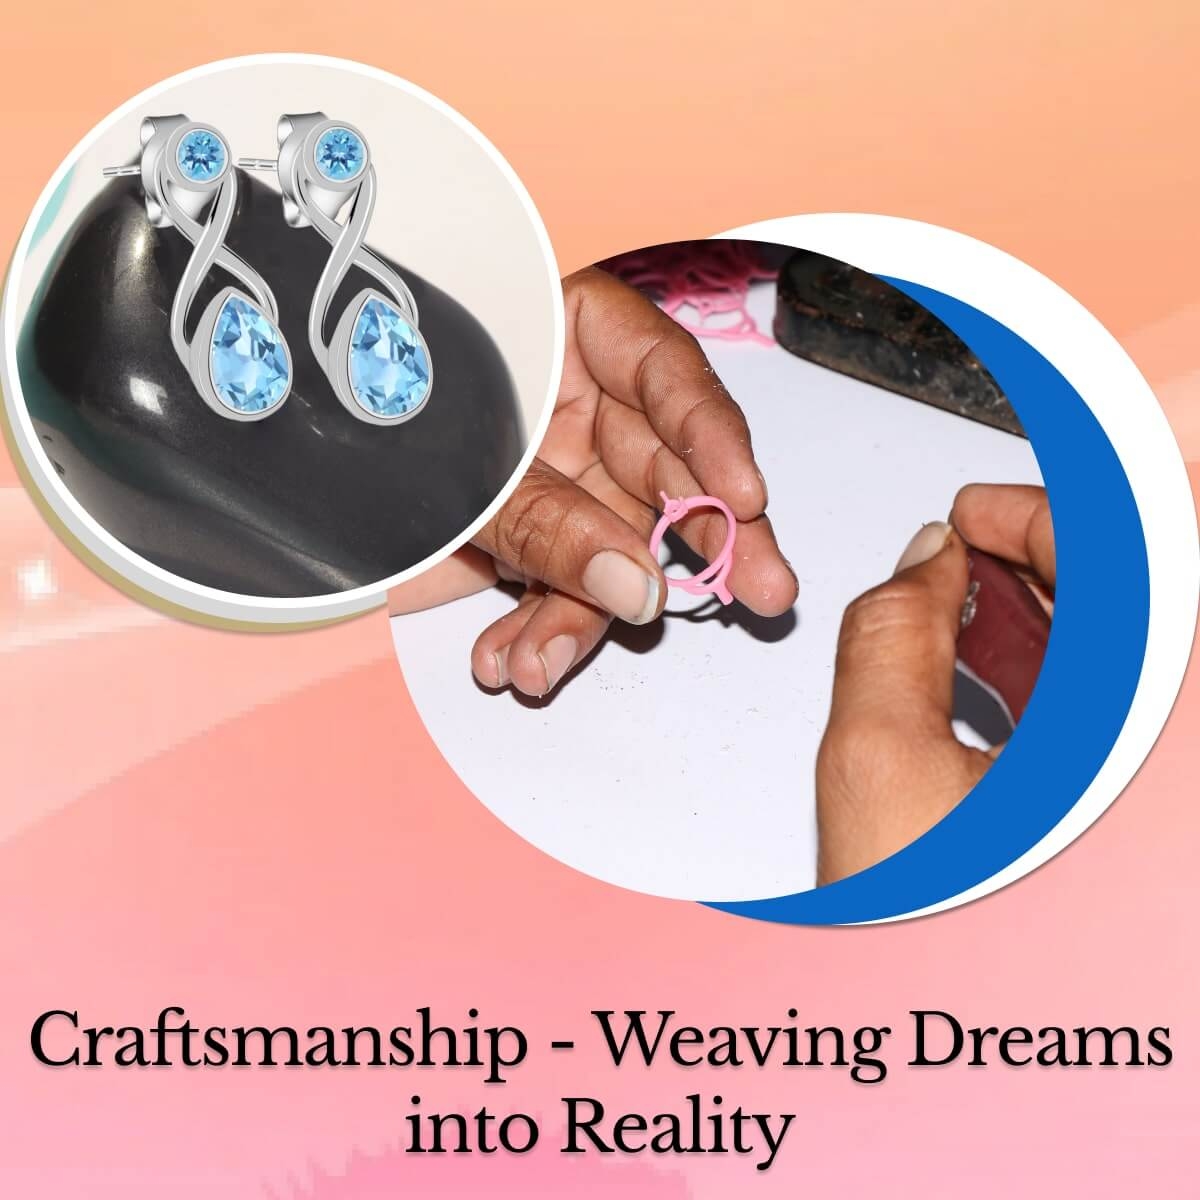 Craftsmanship: The Art of Bringing Imagination to Life